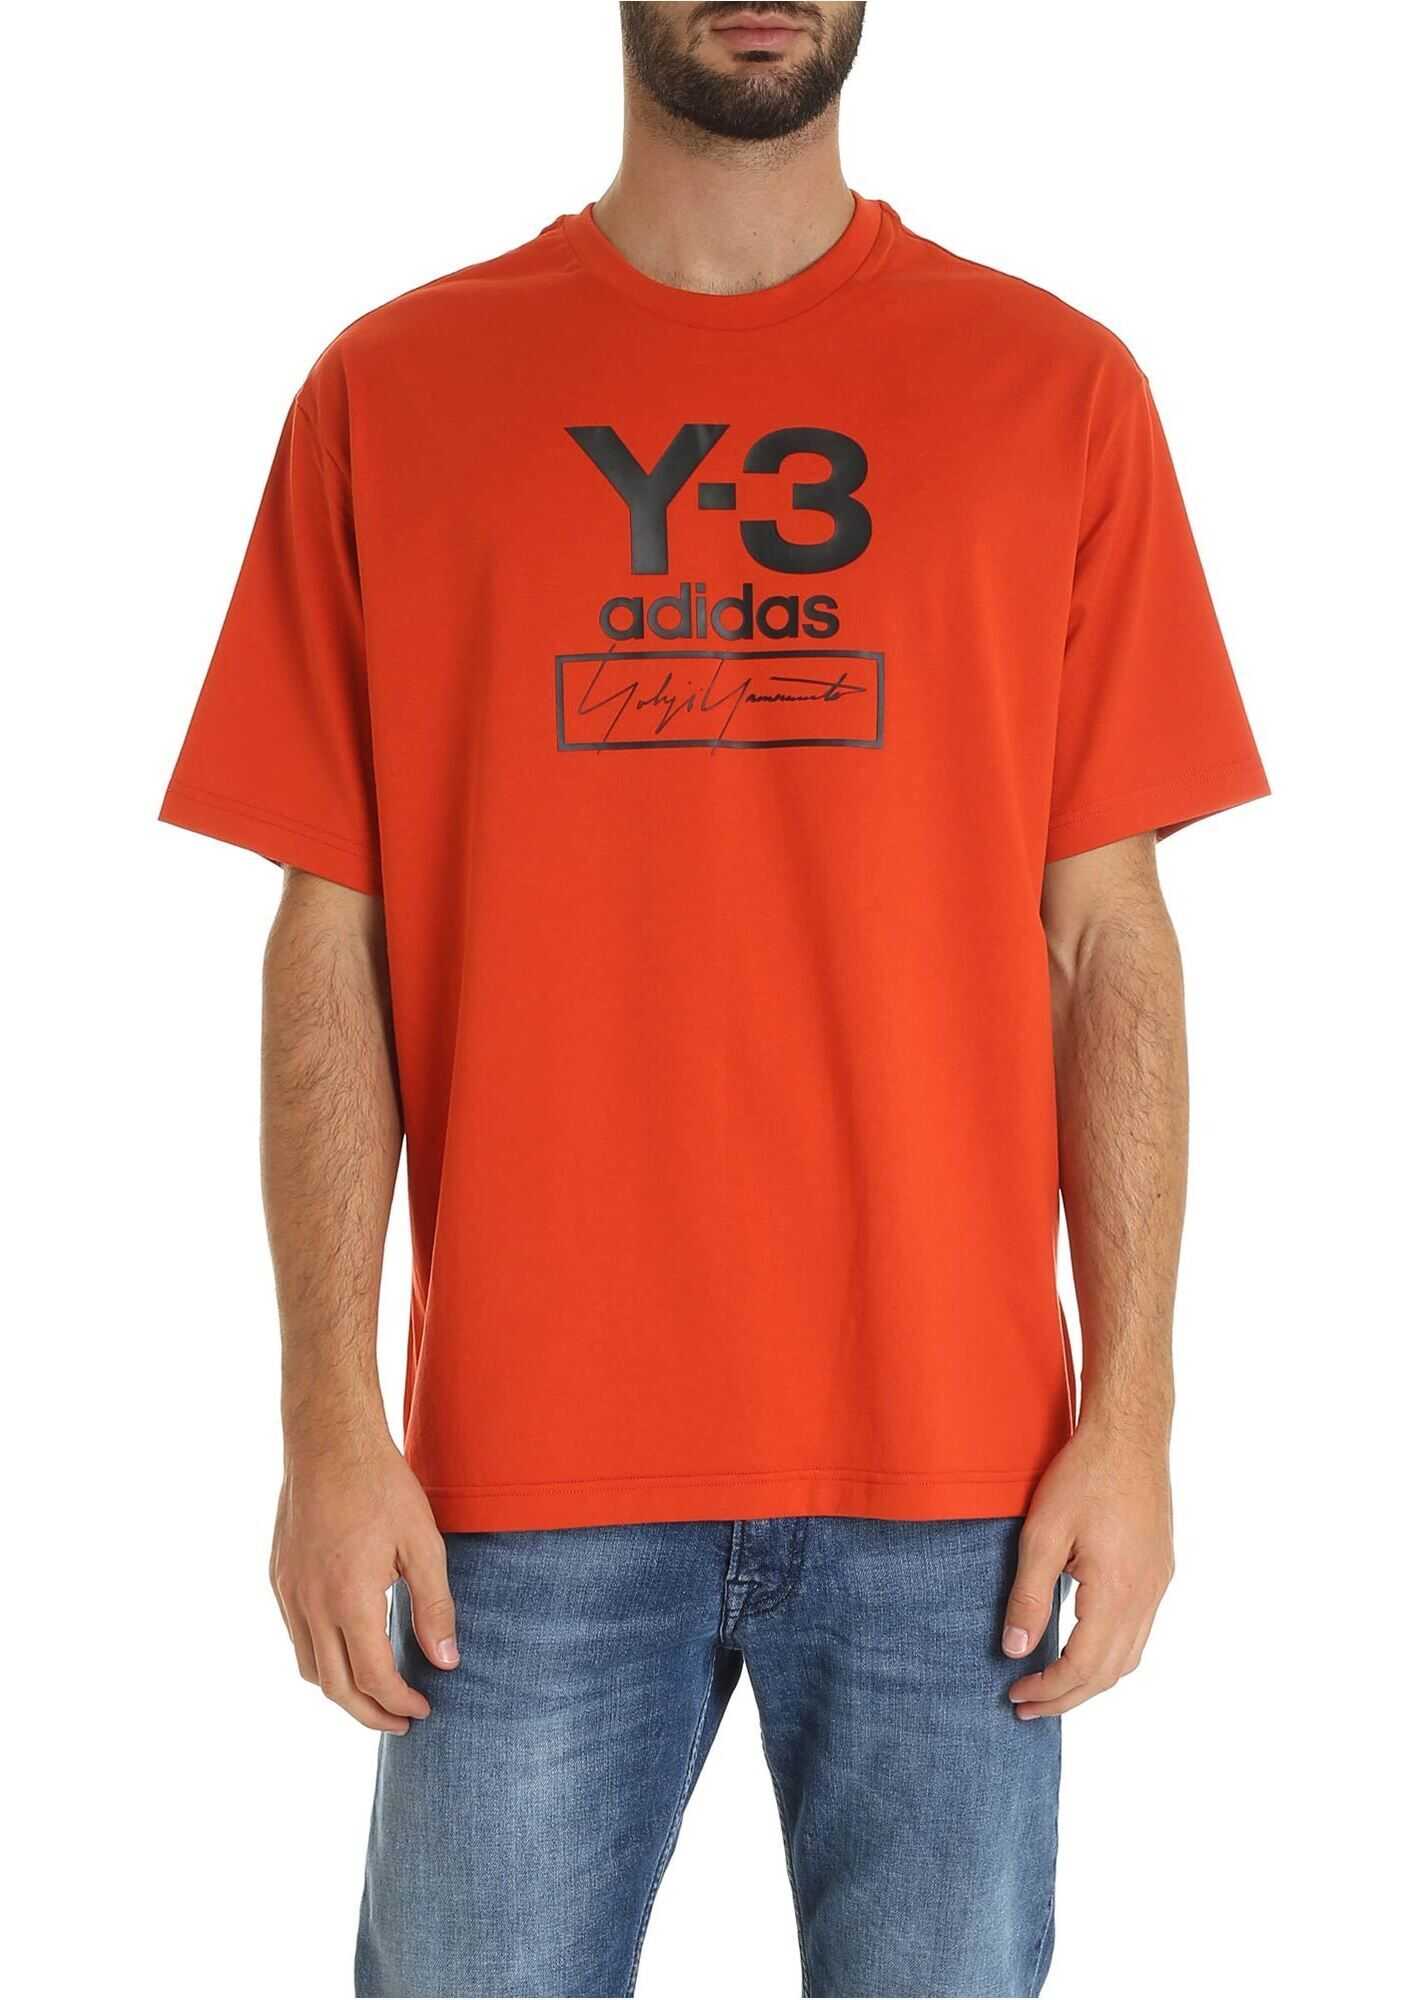 Y-3 T-Shirt In Orange With Black Logo Orange